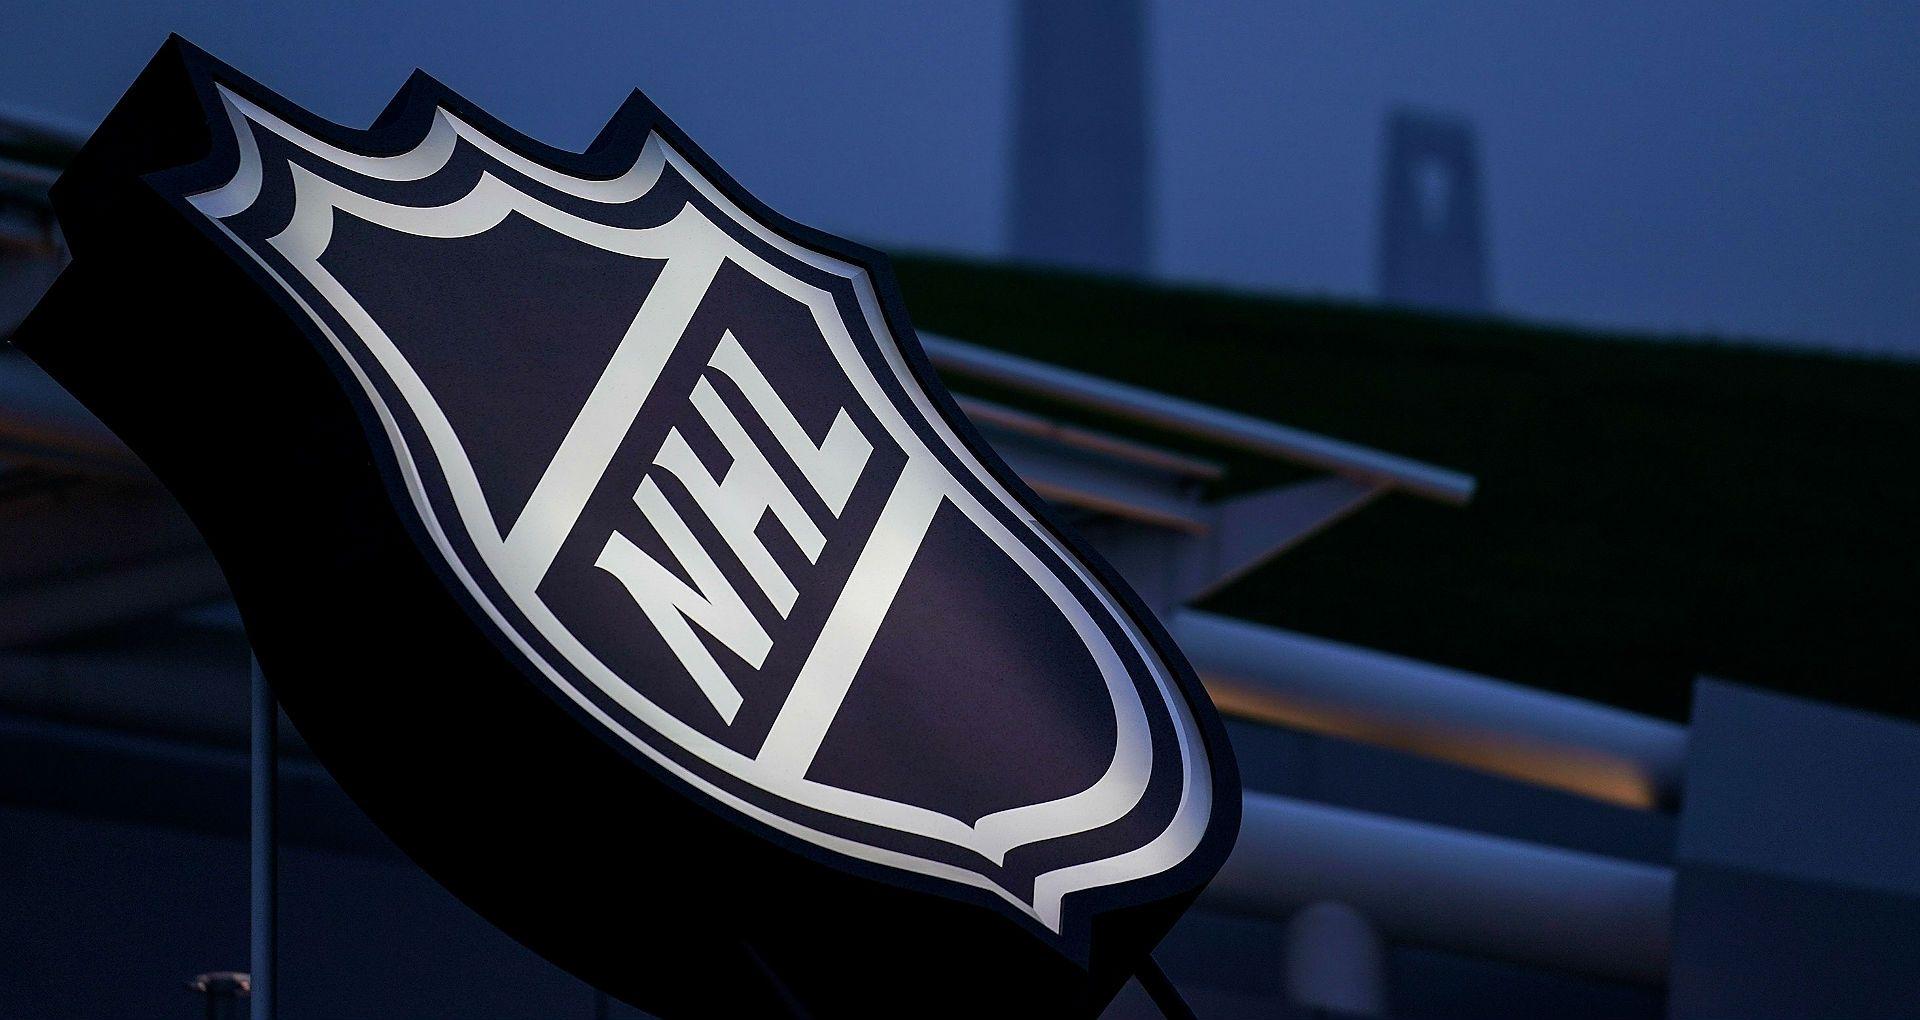 Current 2018 NHL Logo - Key dates for the 2018-19 NHL season | NHL | Sporting News